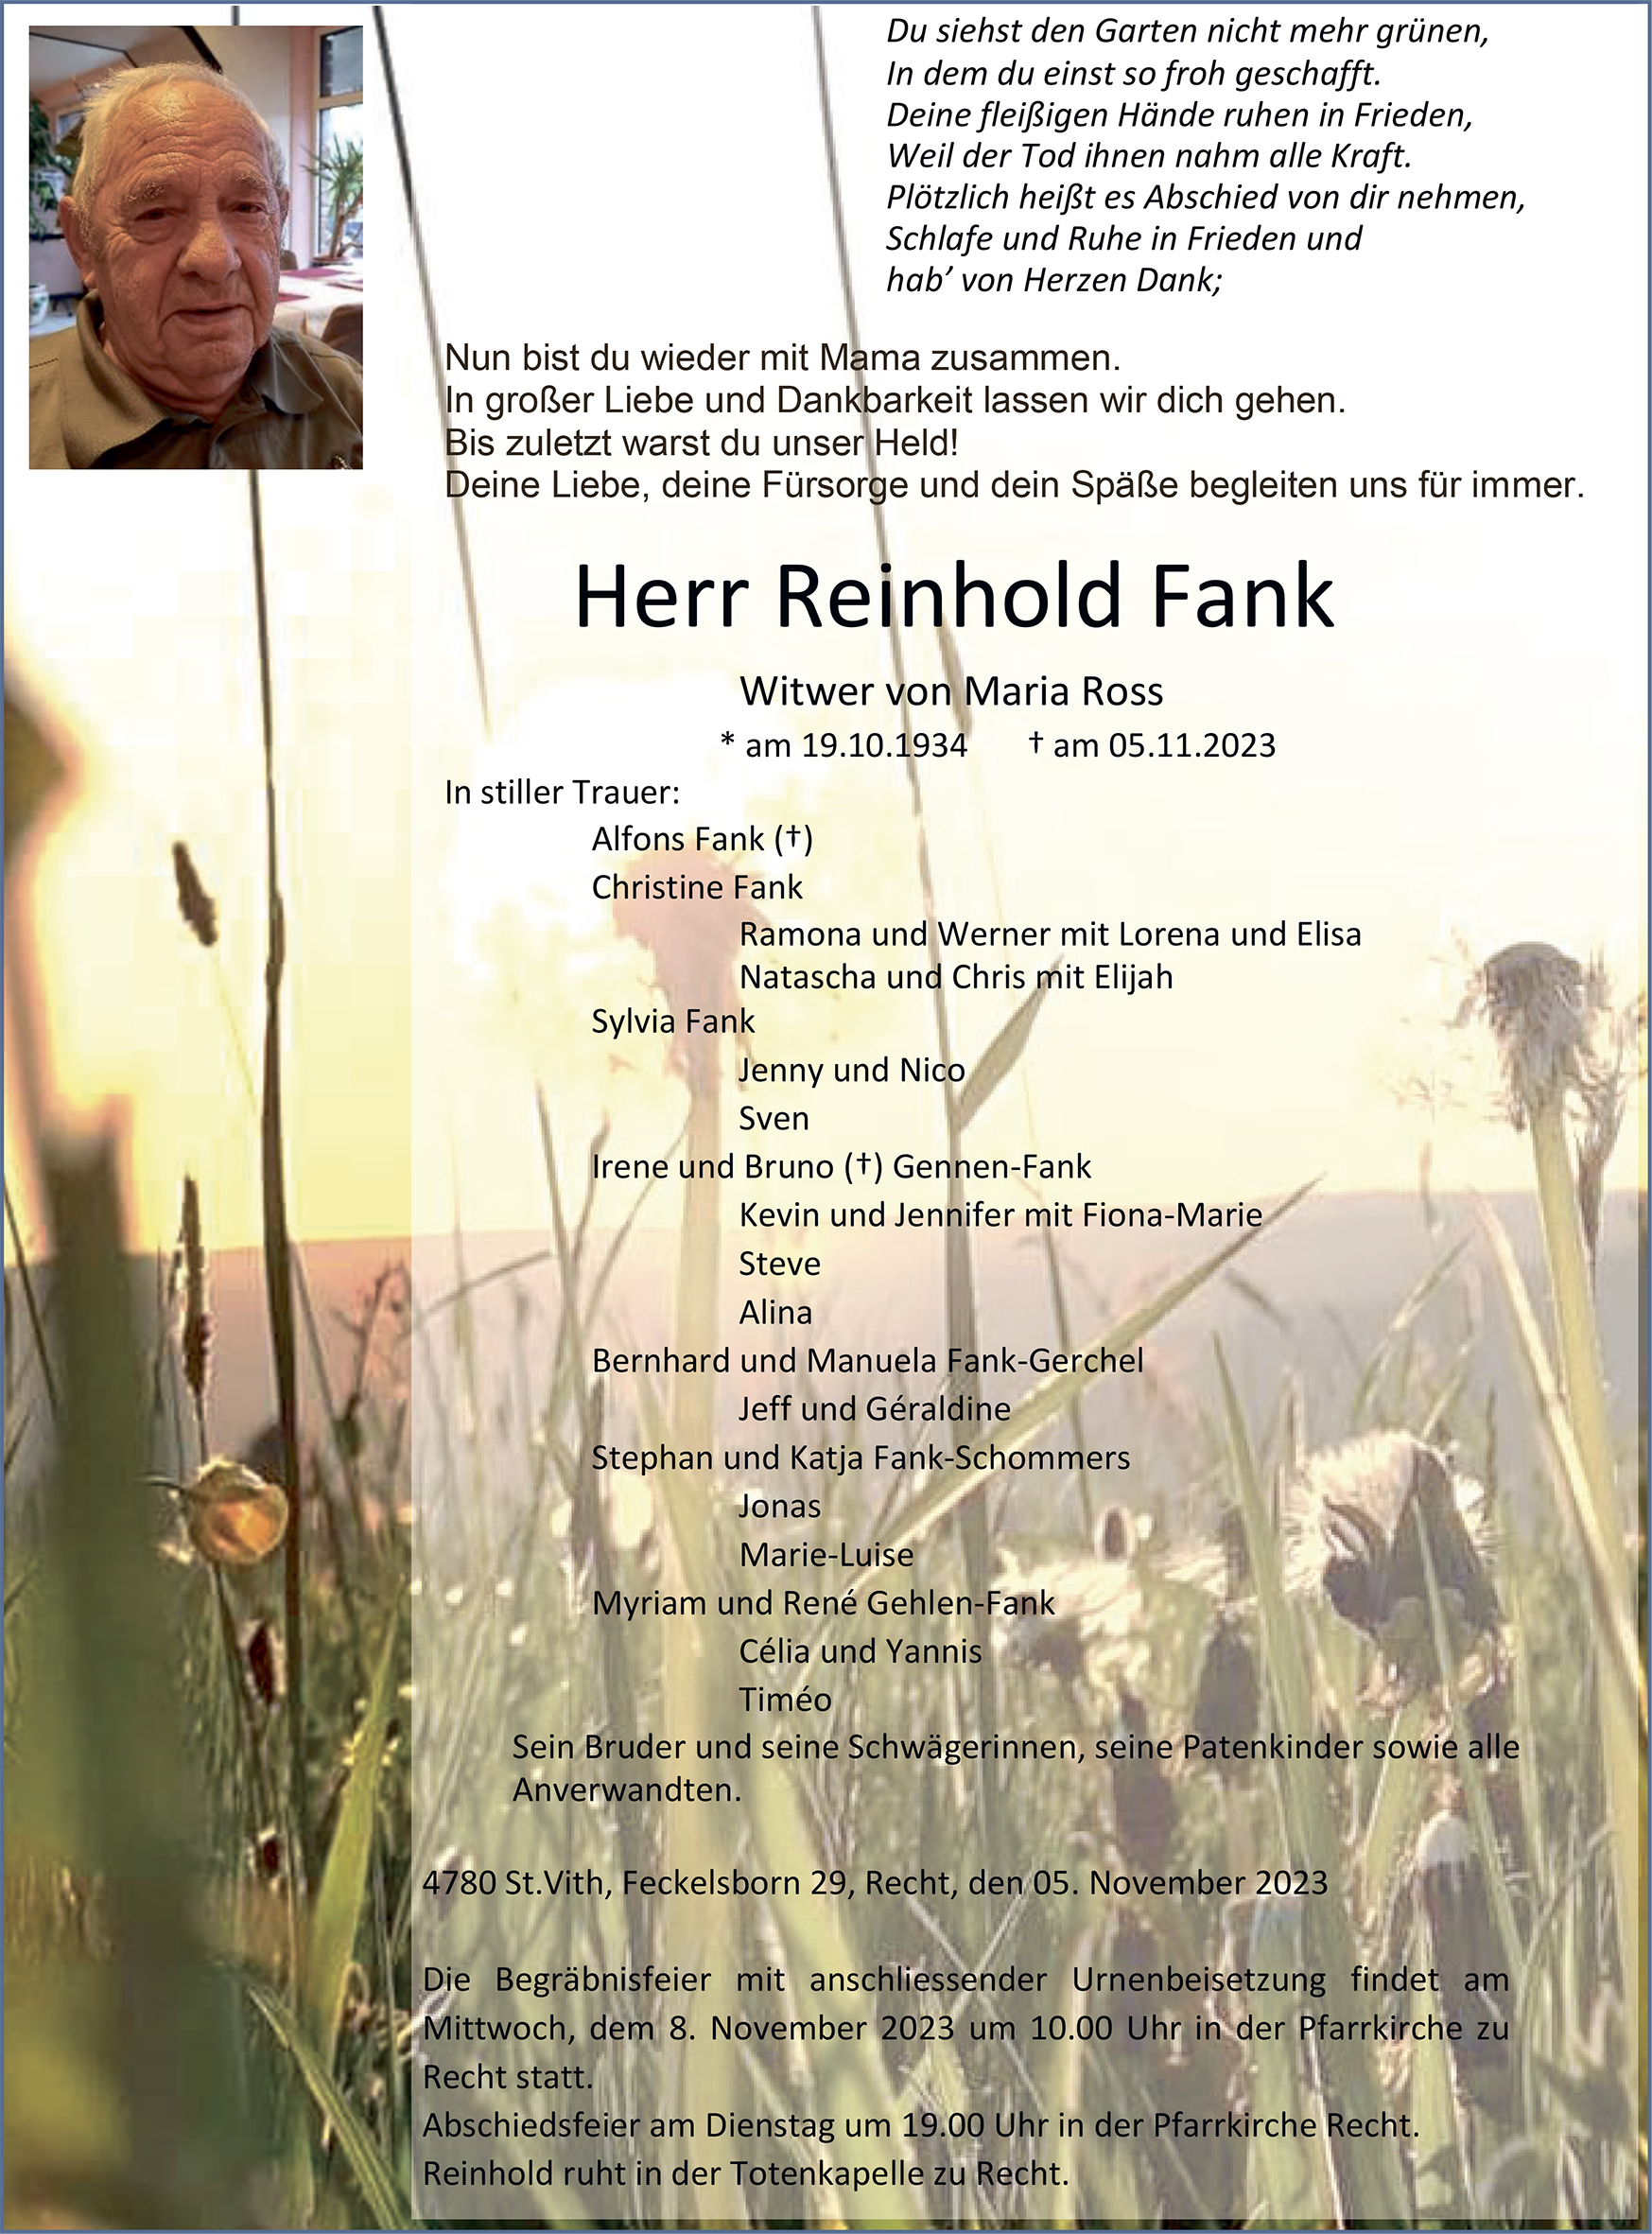 Reinhold Fank